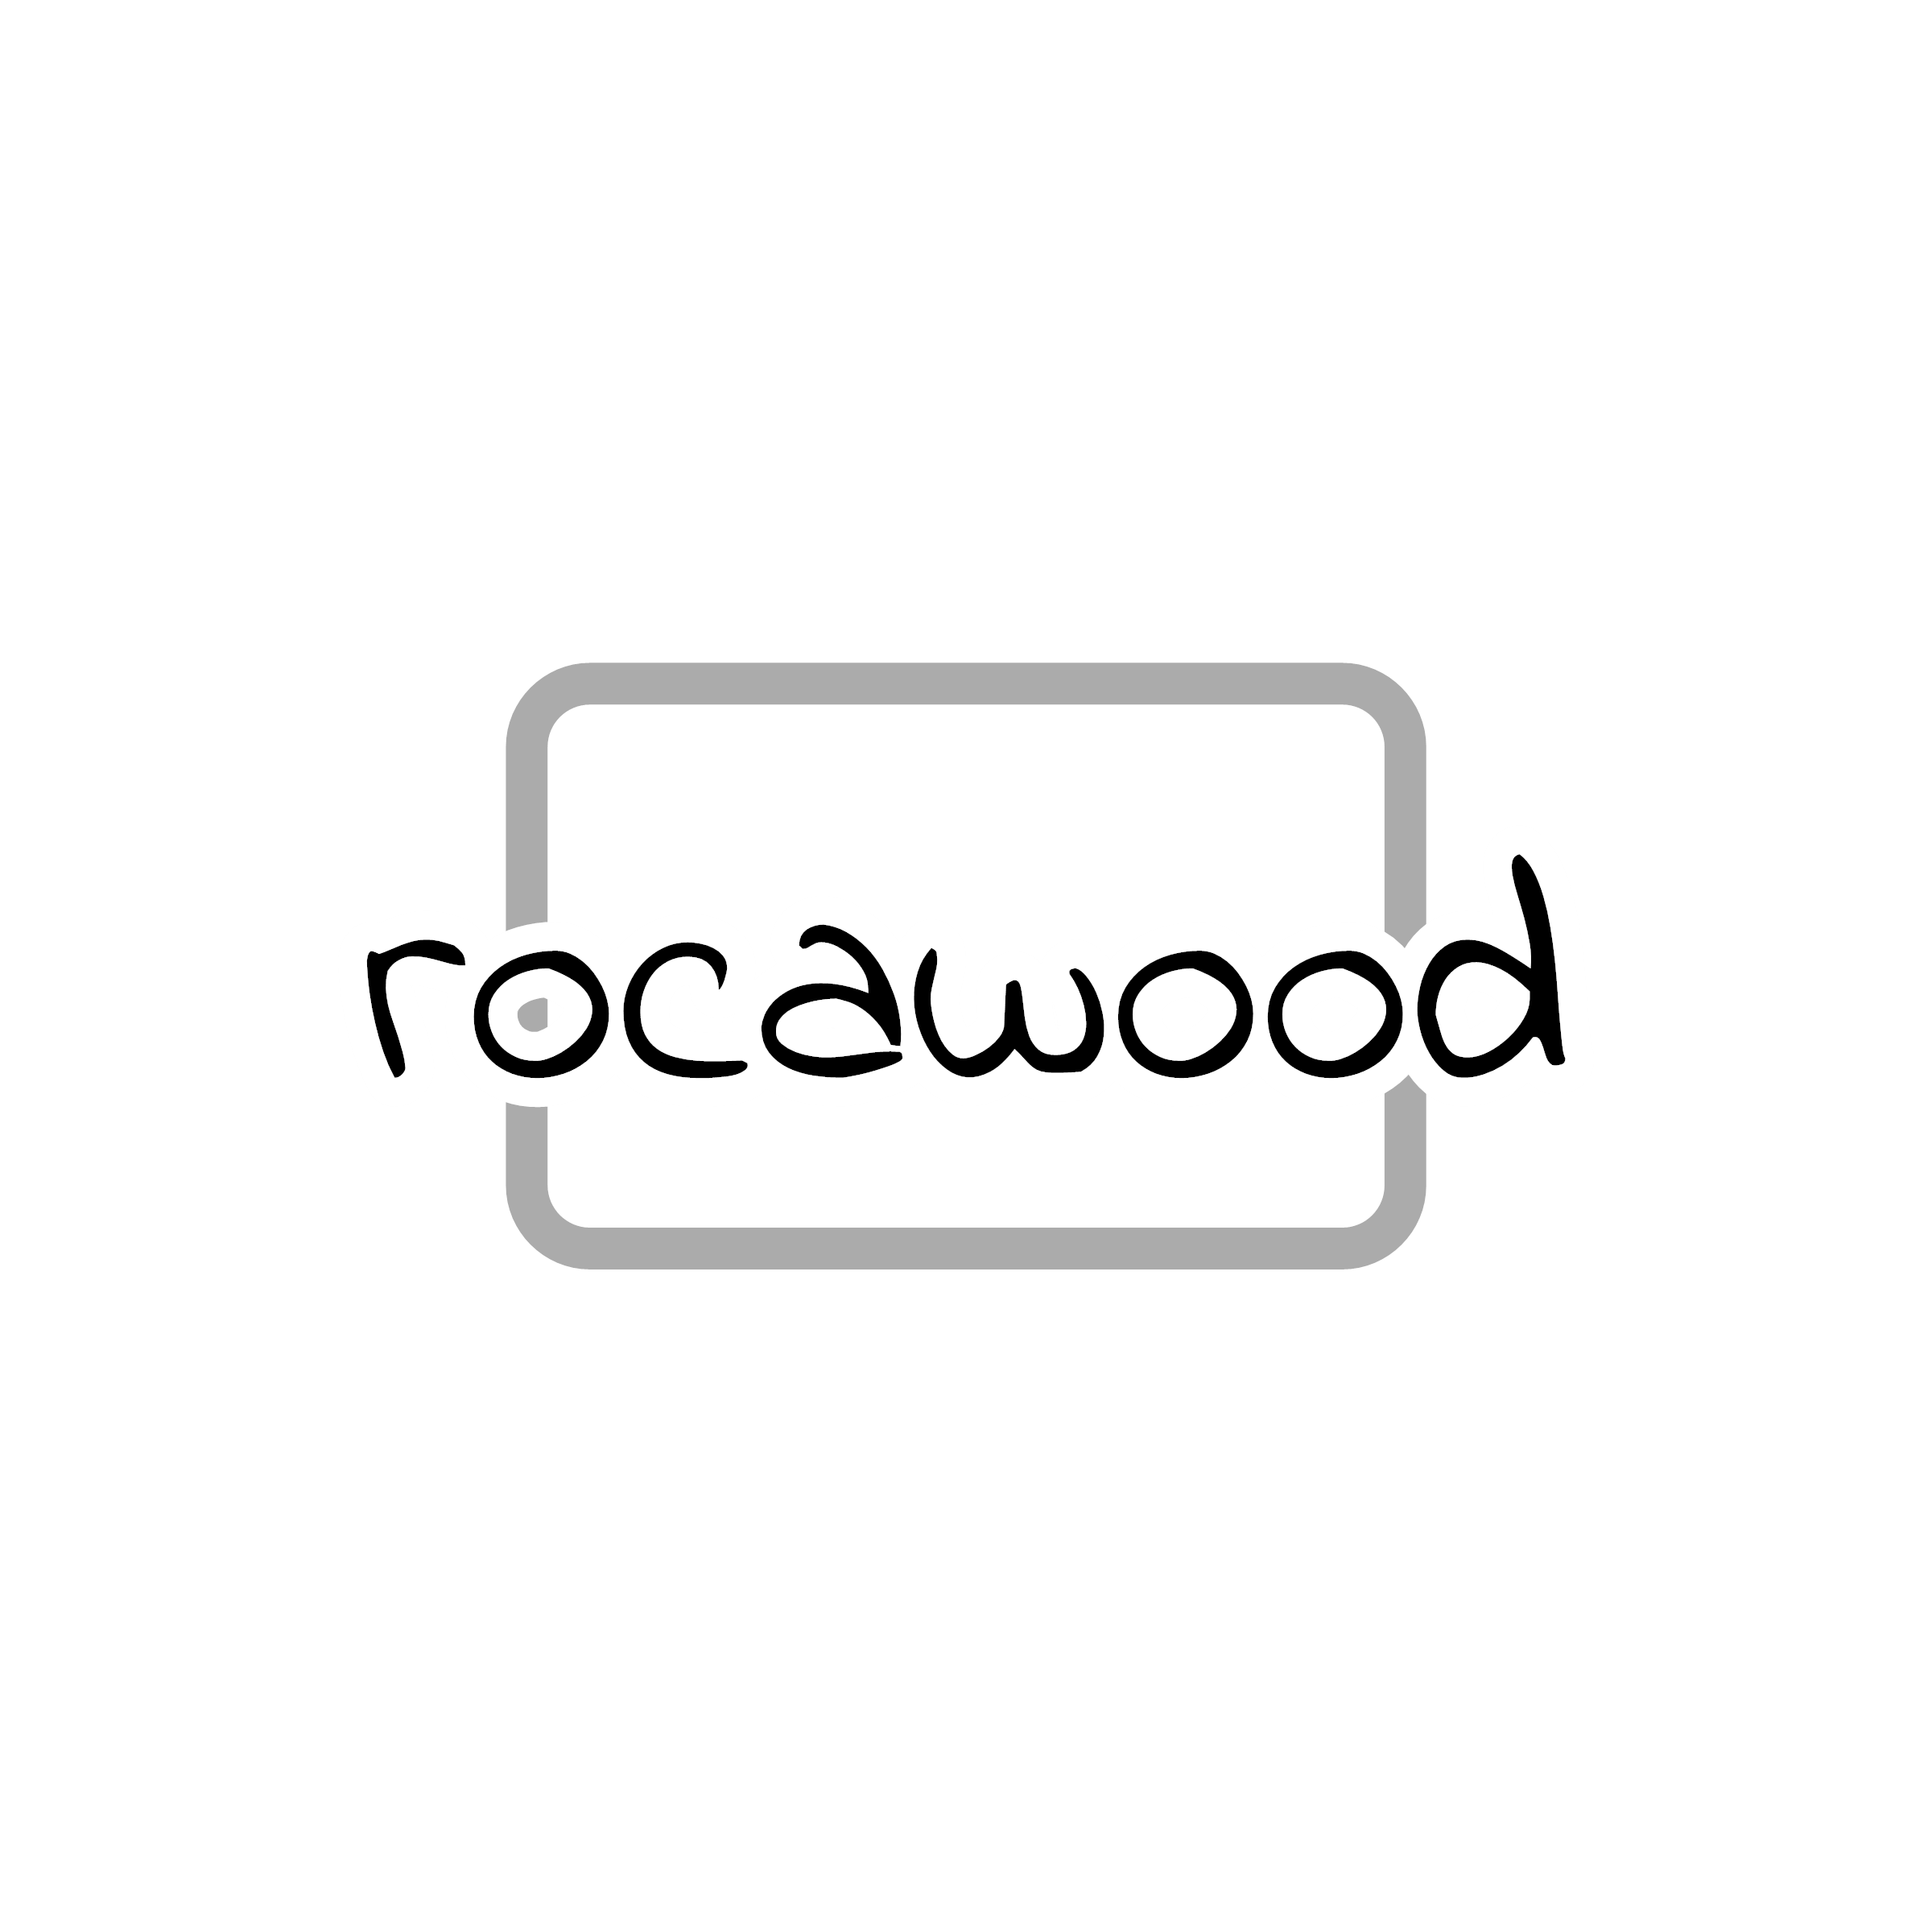 Rocawood